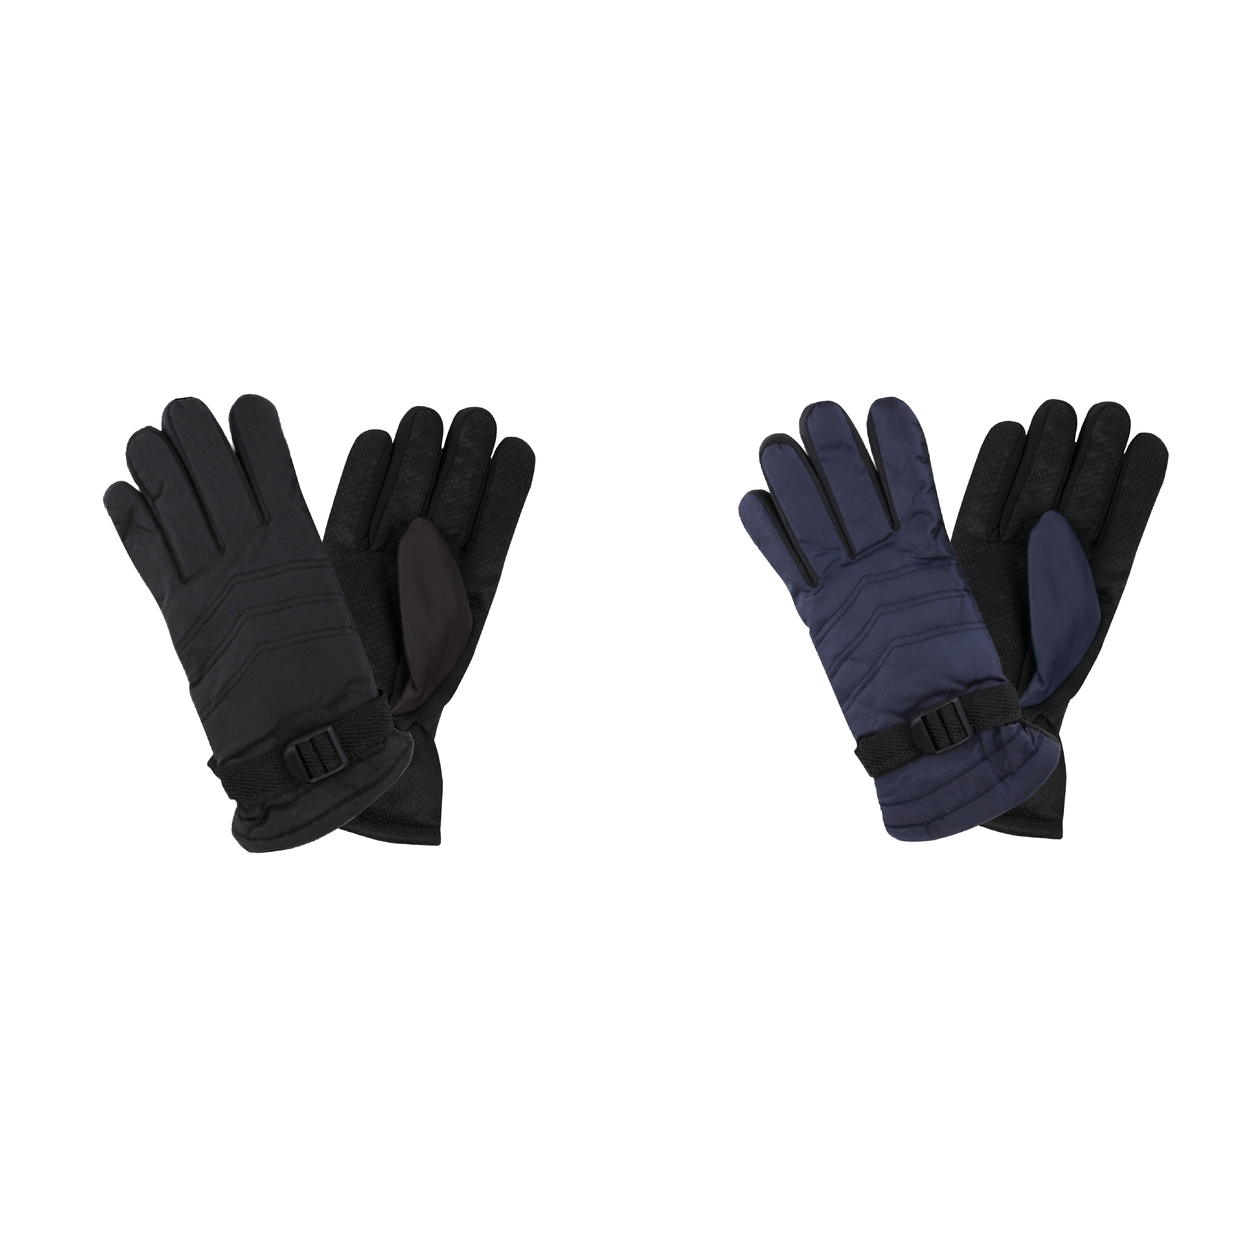 2-Pairs Women's Cozy Fur Lined Snow Ski Warm Winter Gloves - Black/grey